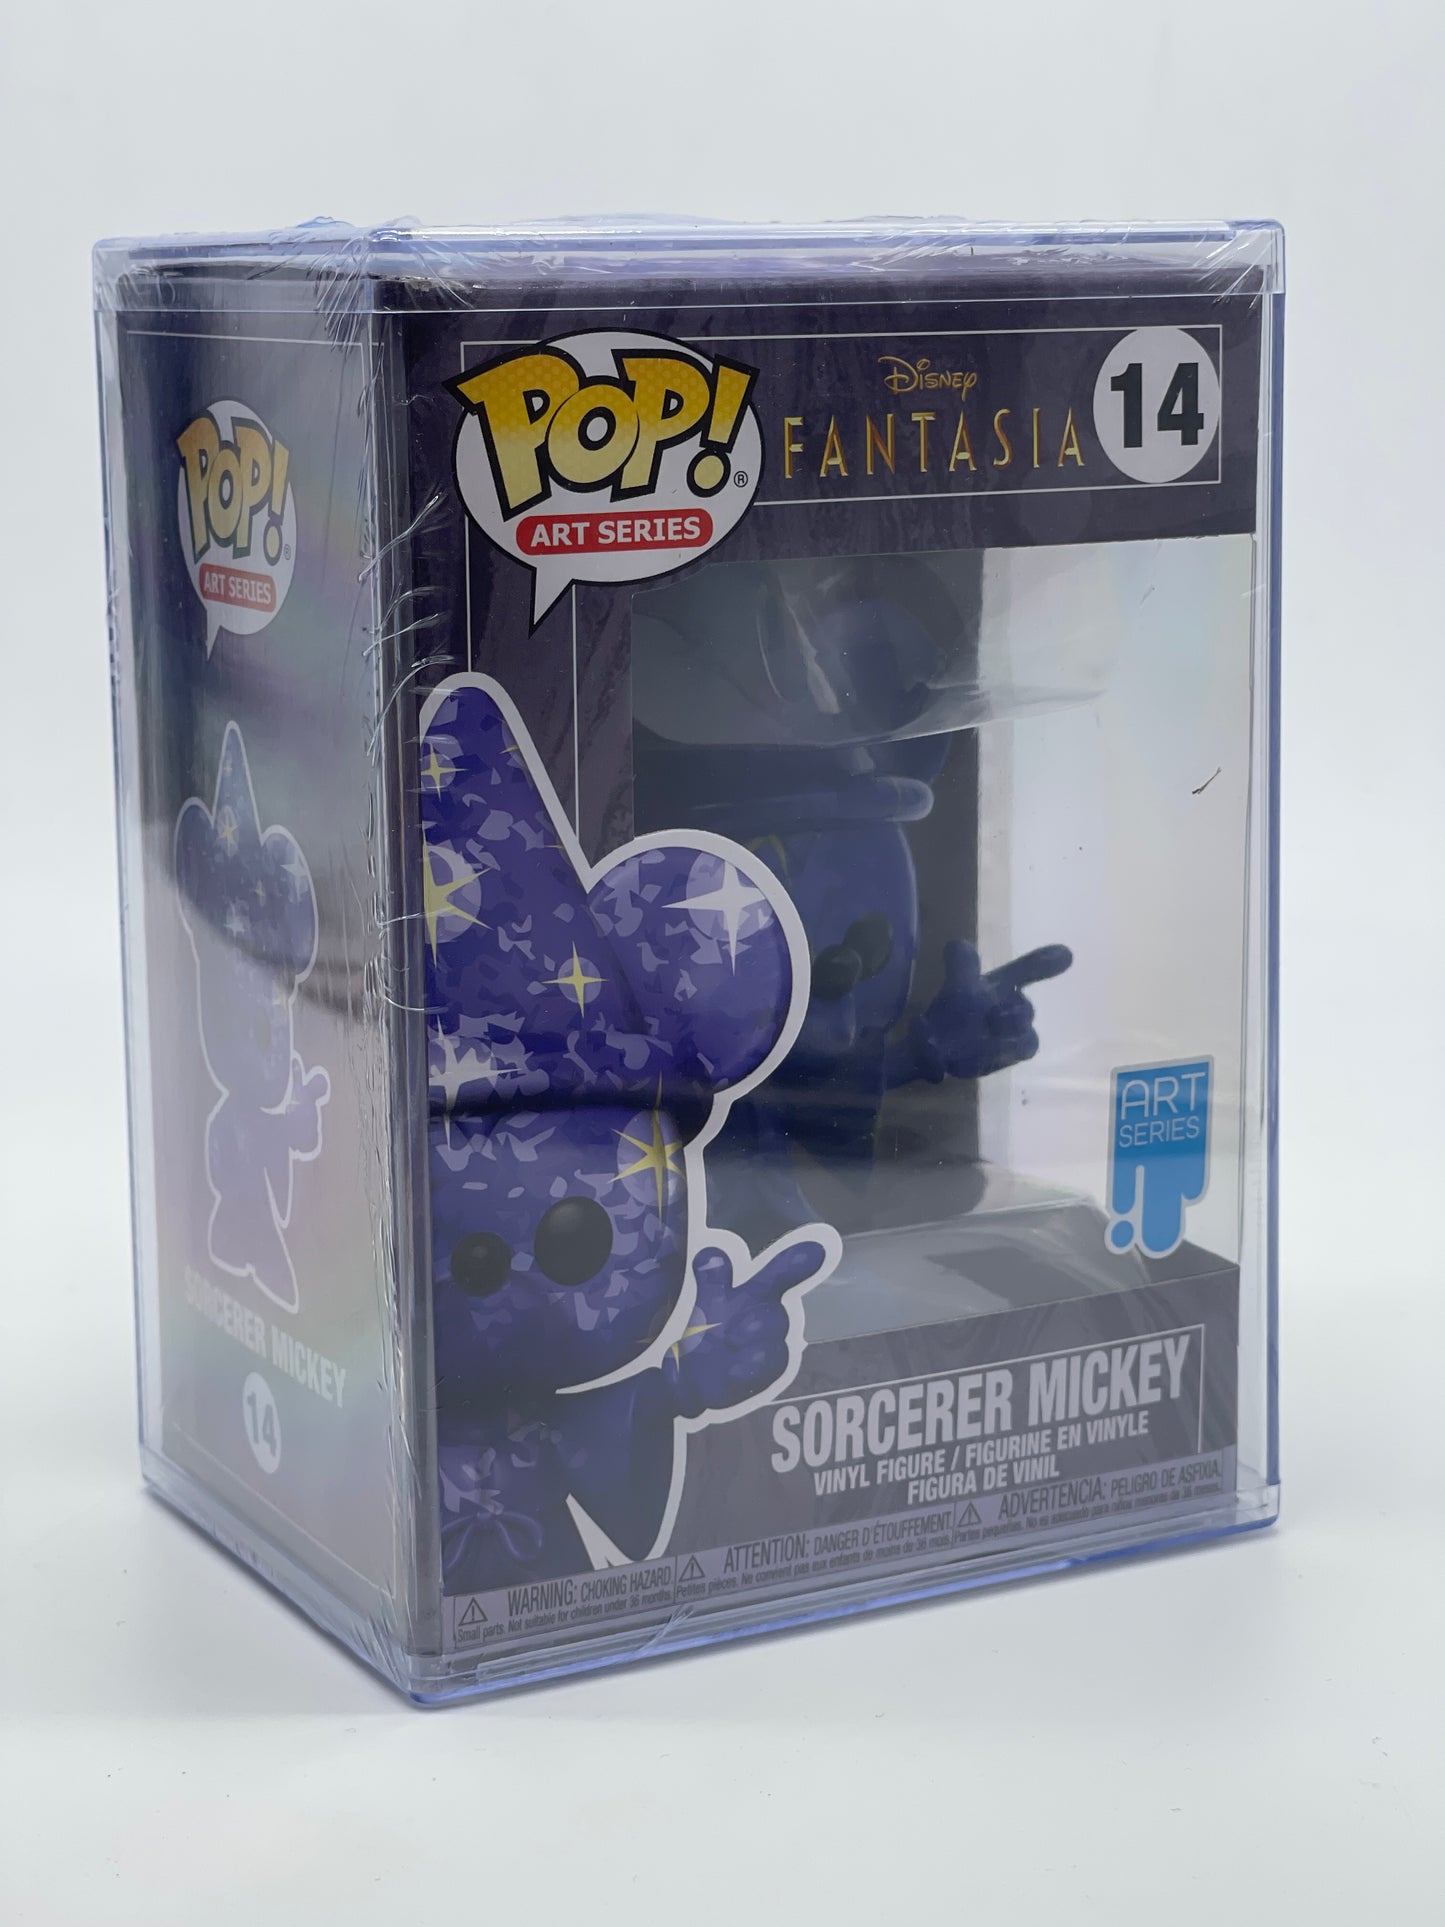 Funko Pop Art Series Disney Fantasia 14 Sorcerer Mickey